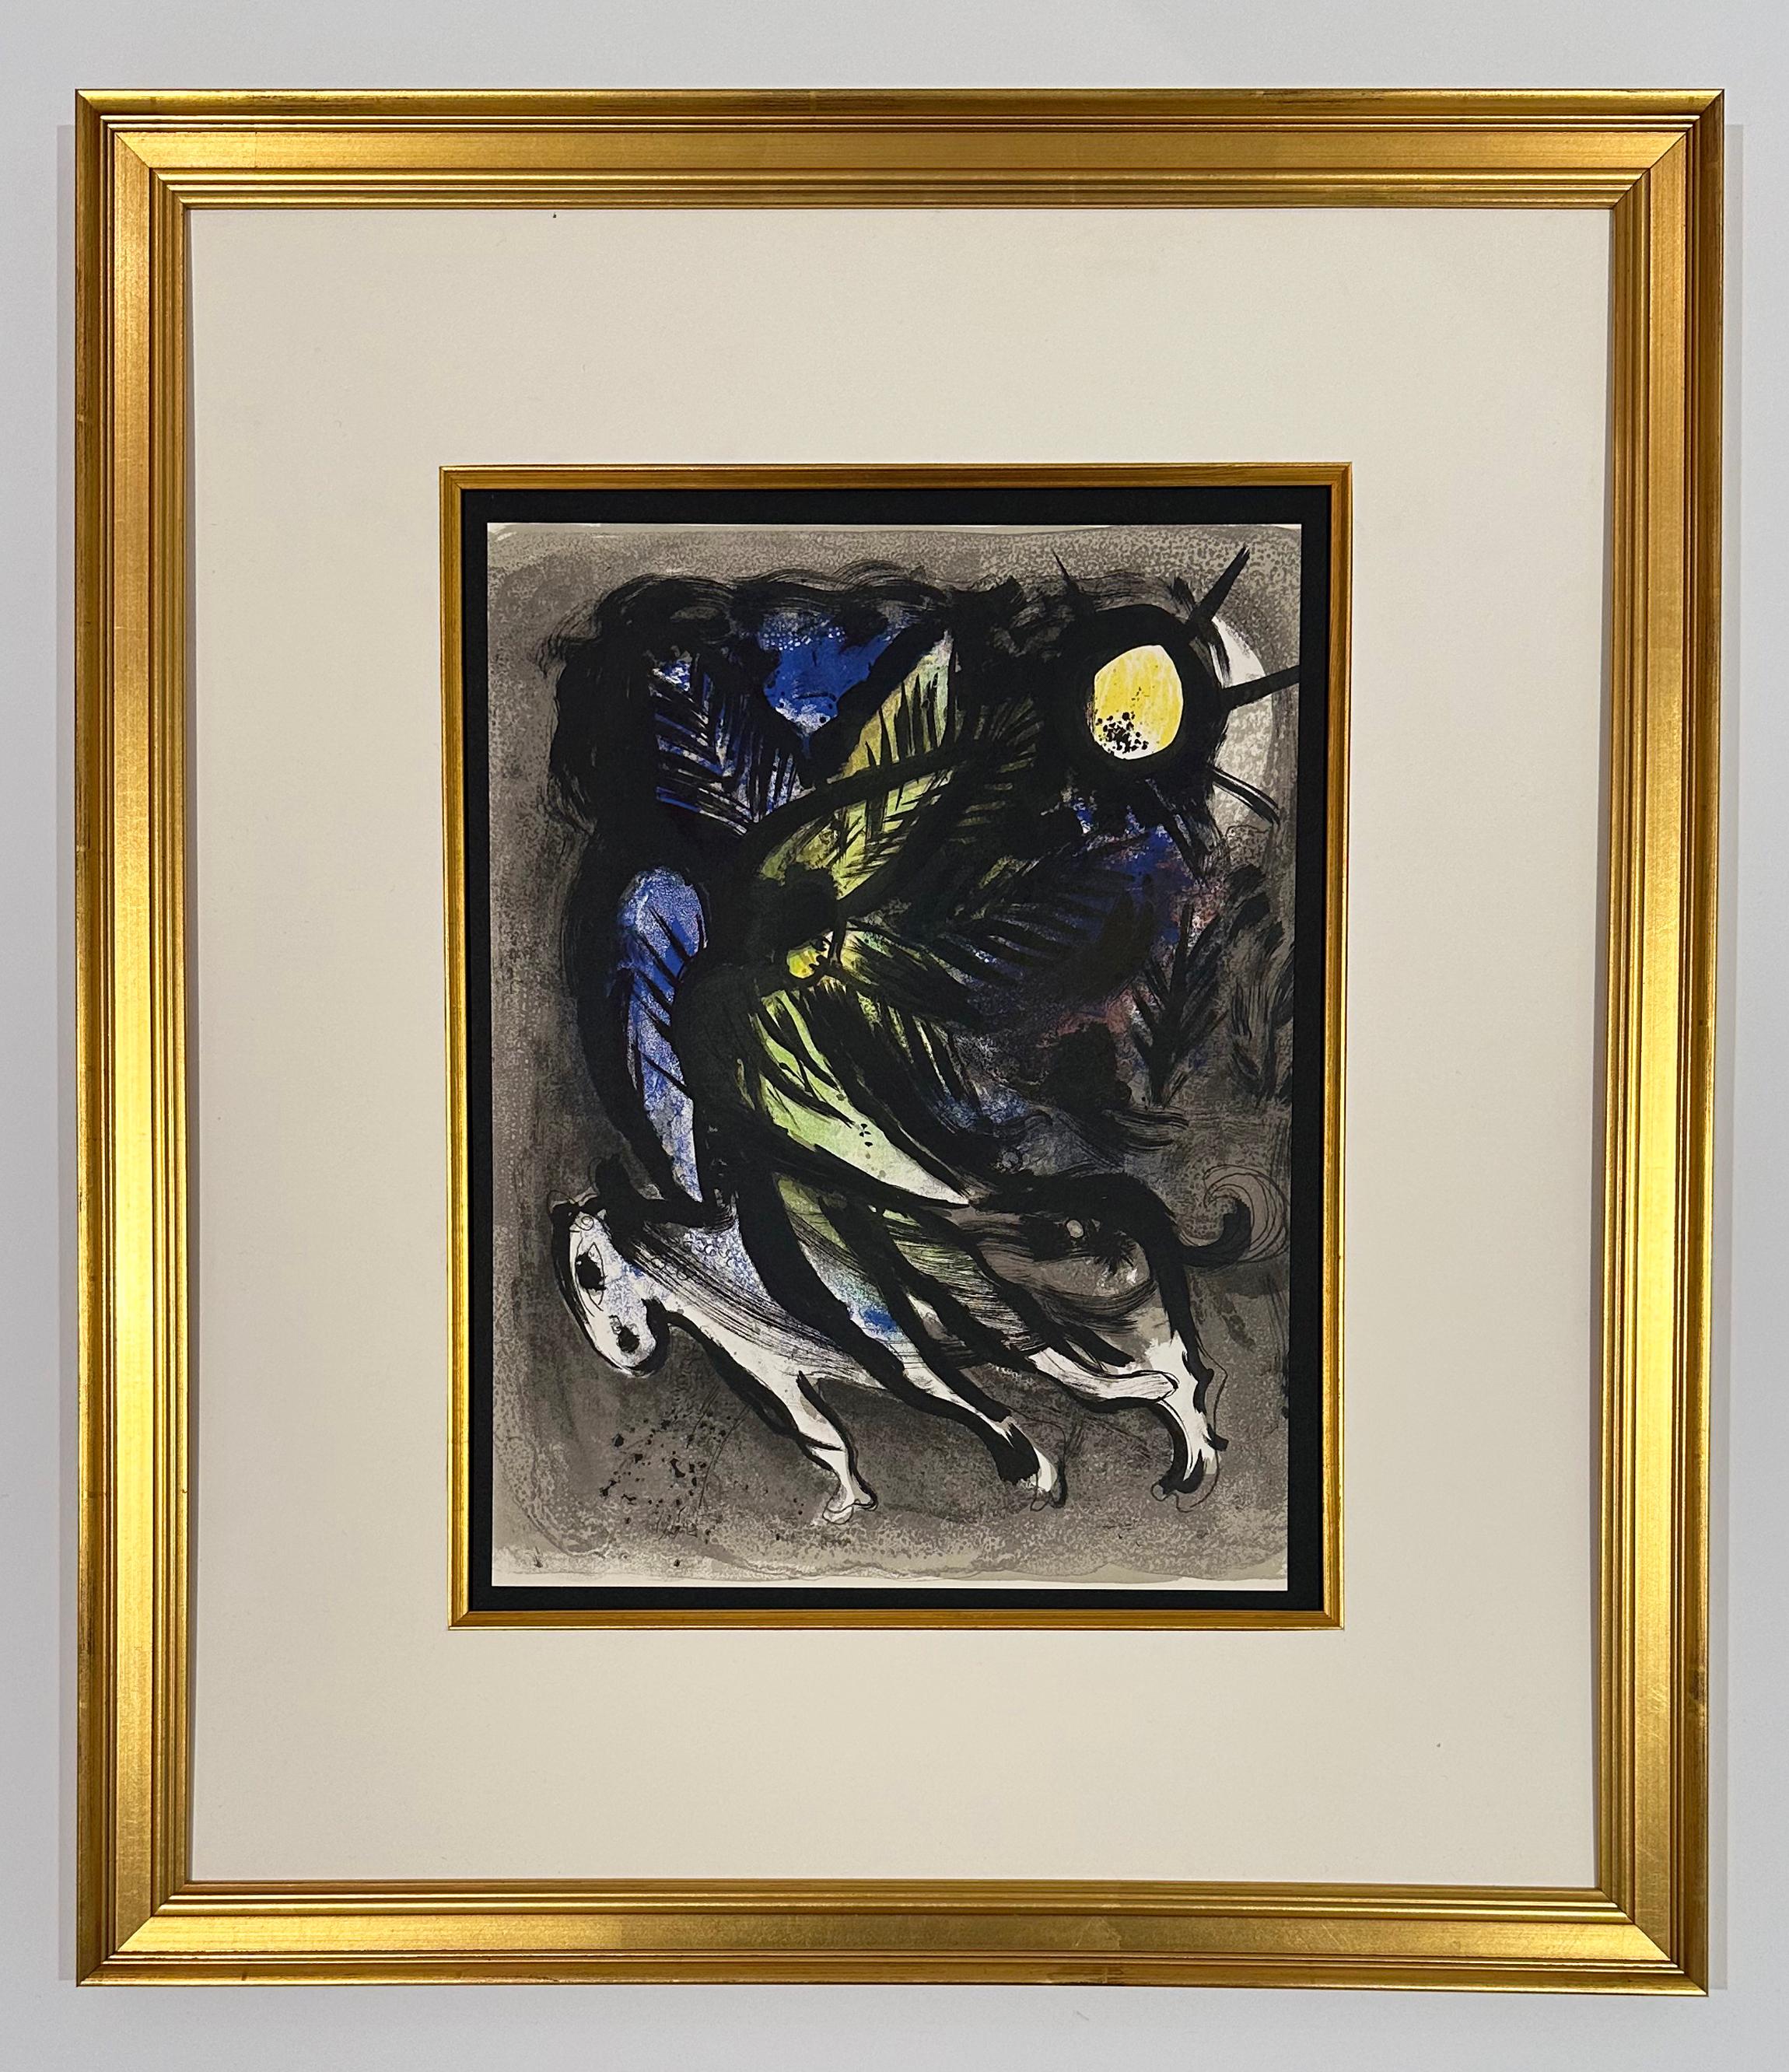 The Angel, von 1960 Mourlot Lithographe I – Print von Marc Chagall